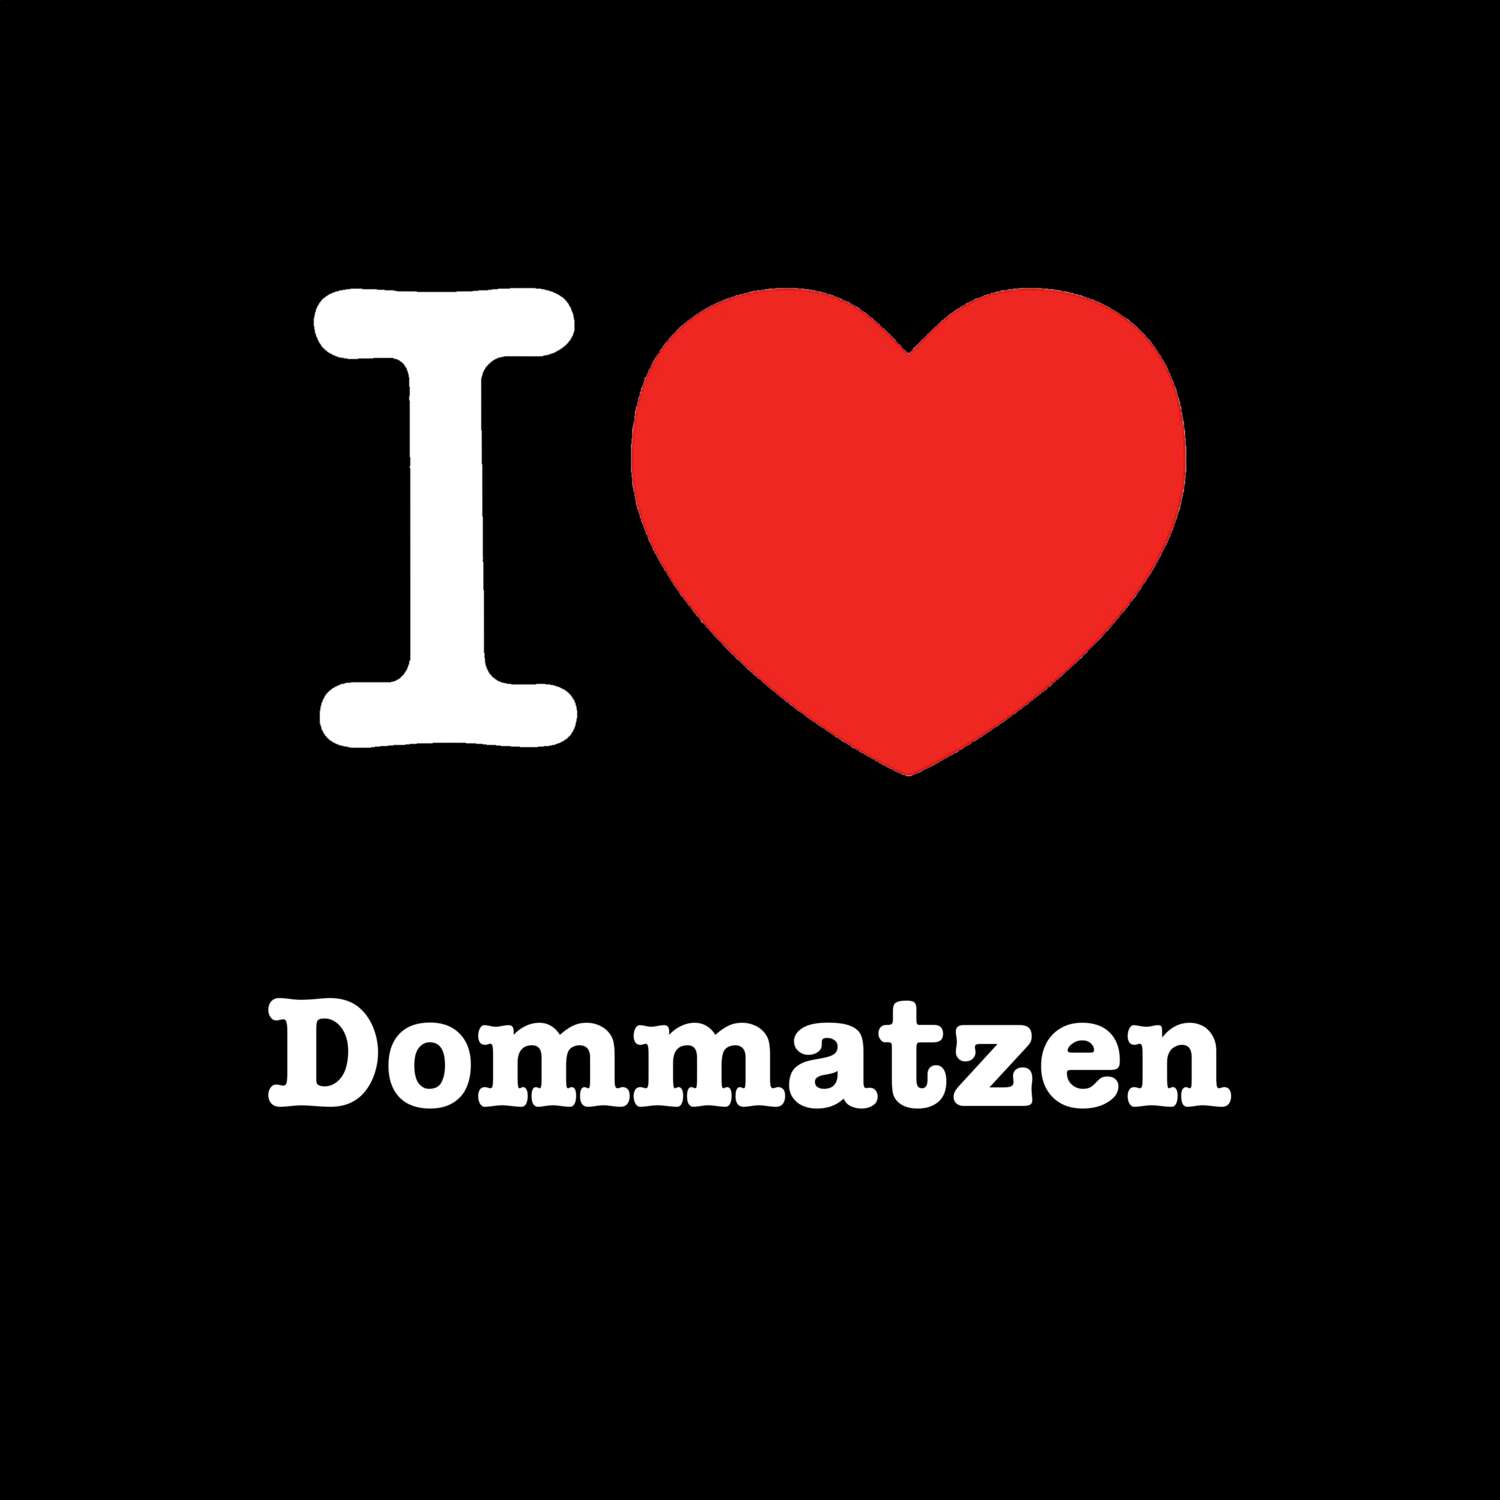 Dommatzen T-Shirt »I love«